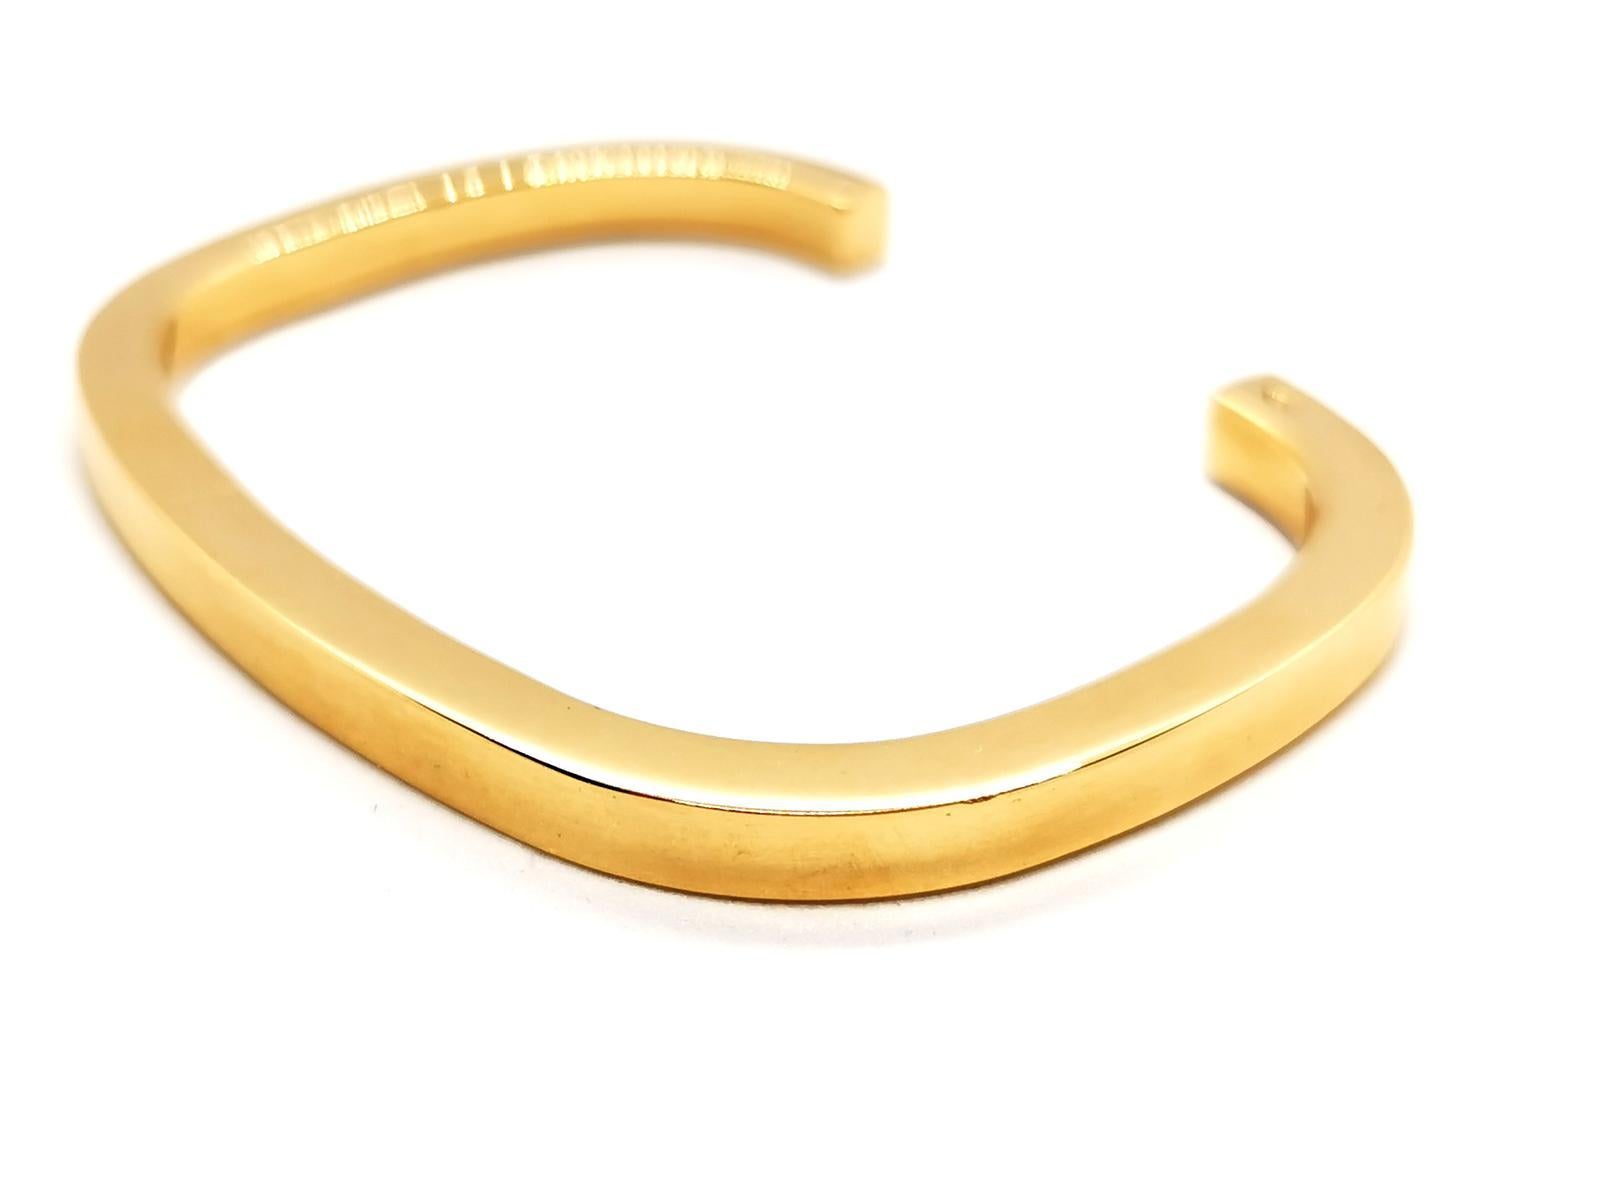 Bracelet open ring. golden yellow 750 mils (18 carats). solid. rectangular. inner diameter: 5.6 cm x 4.4 cm. height: 17 cm. width: 0.47 cm. total weight: 49.07 g. punch eagle's head. excellent condition.
